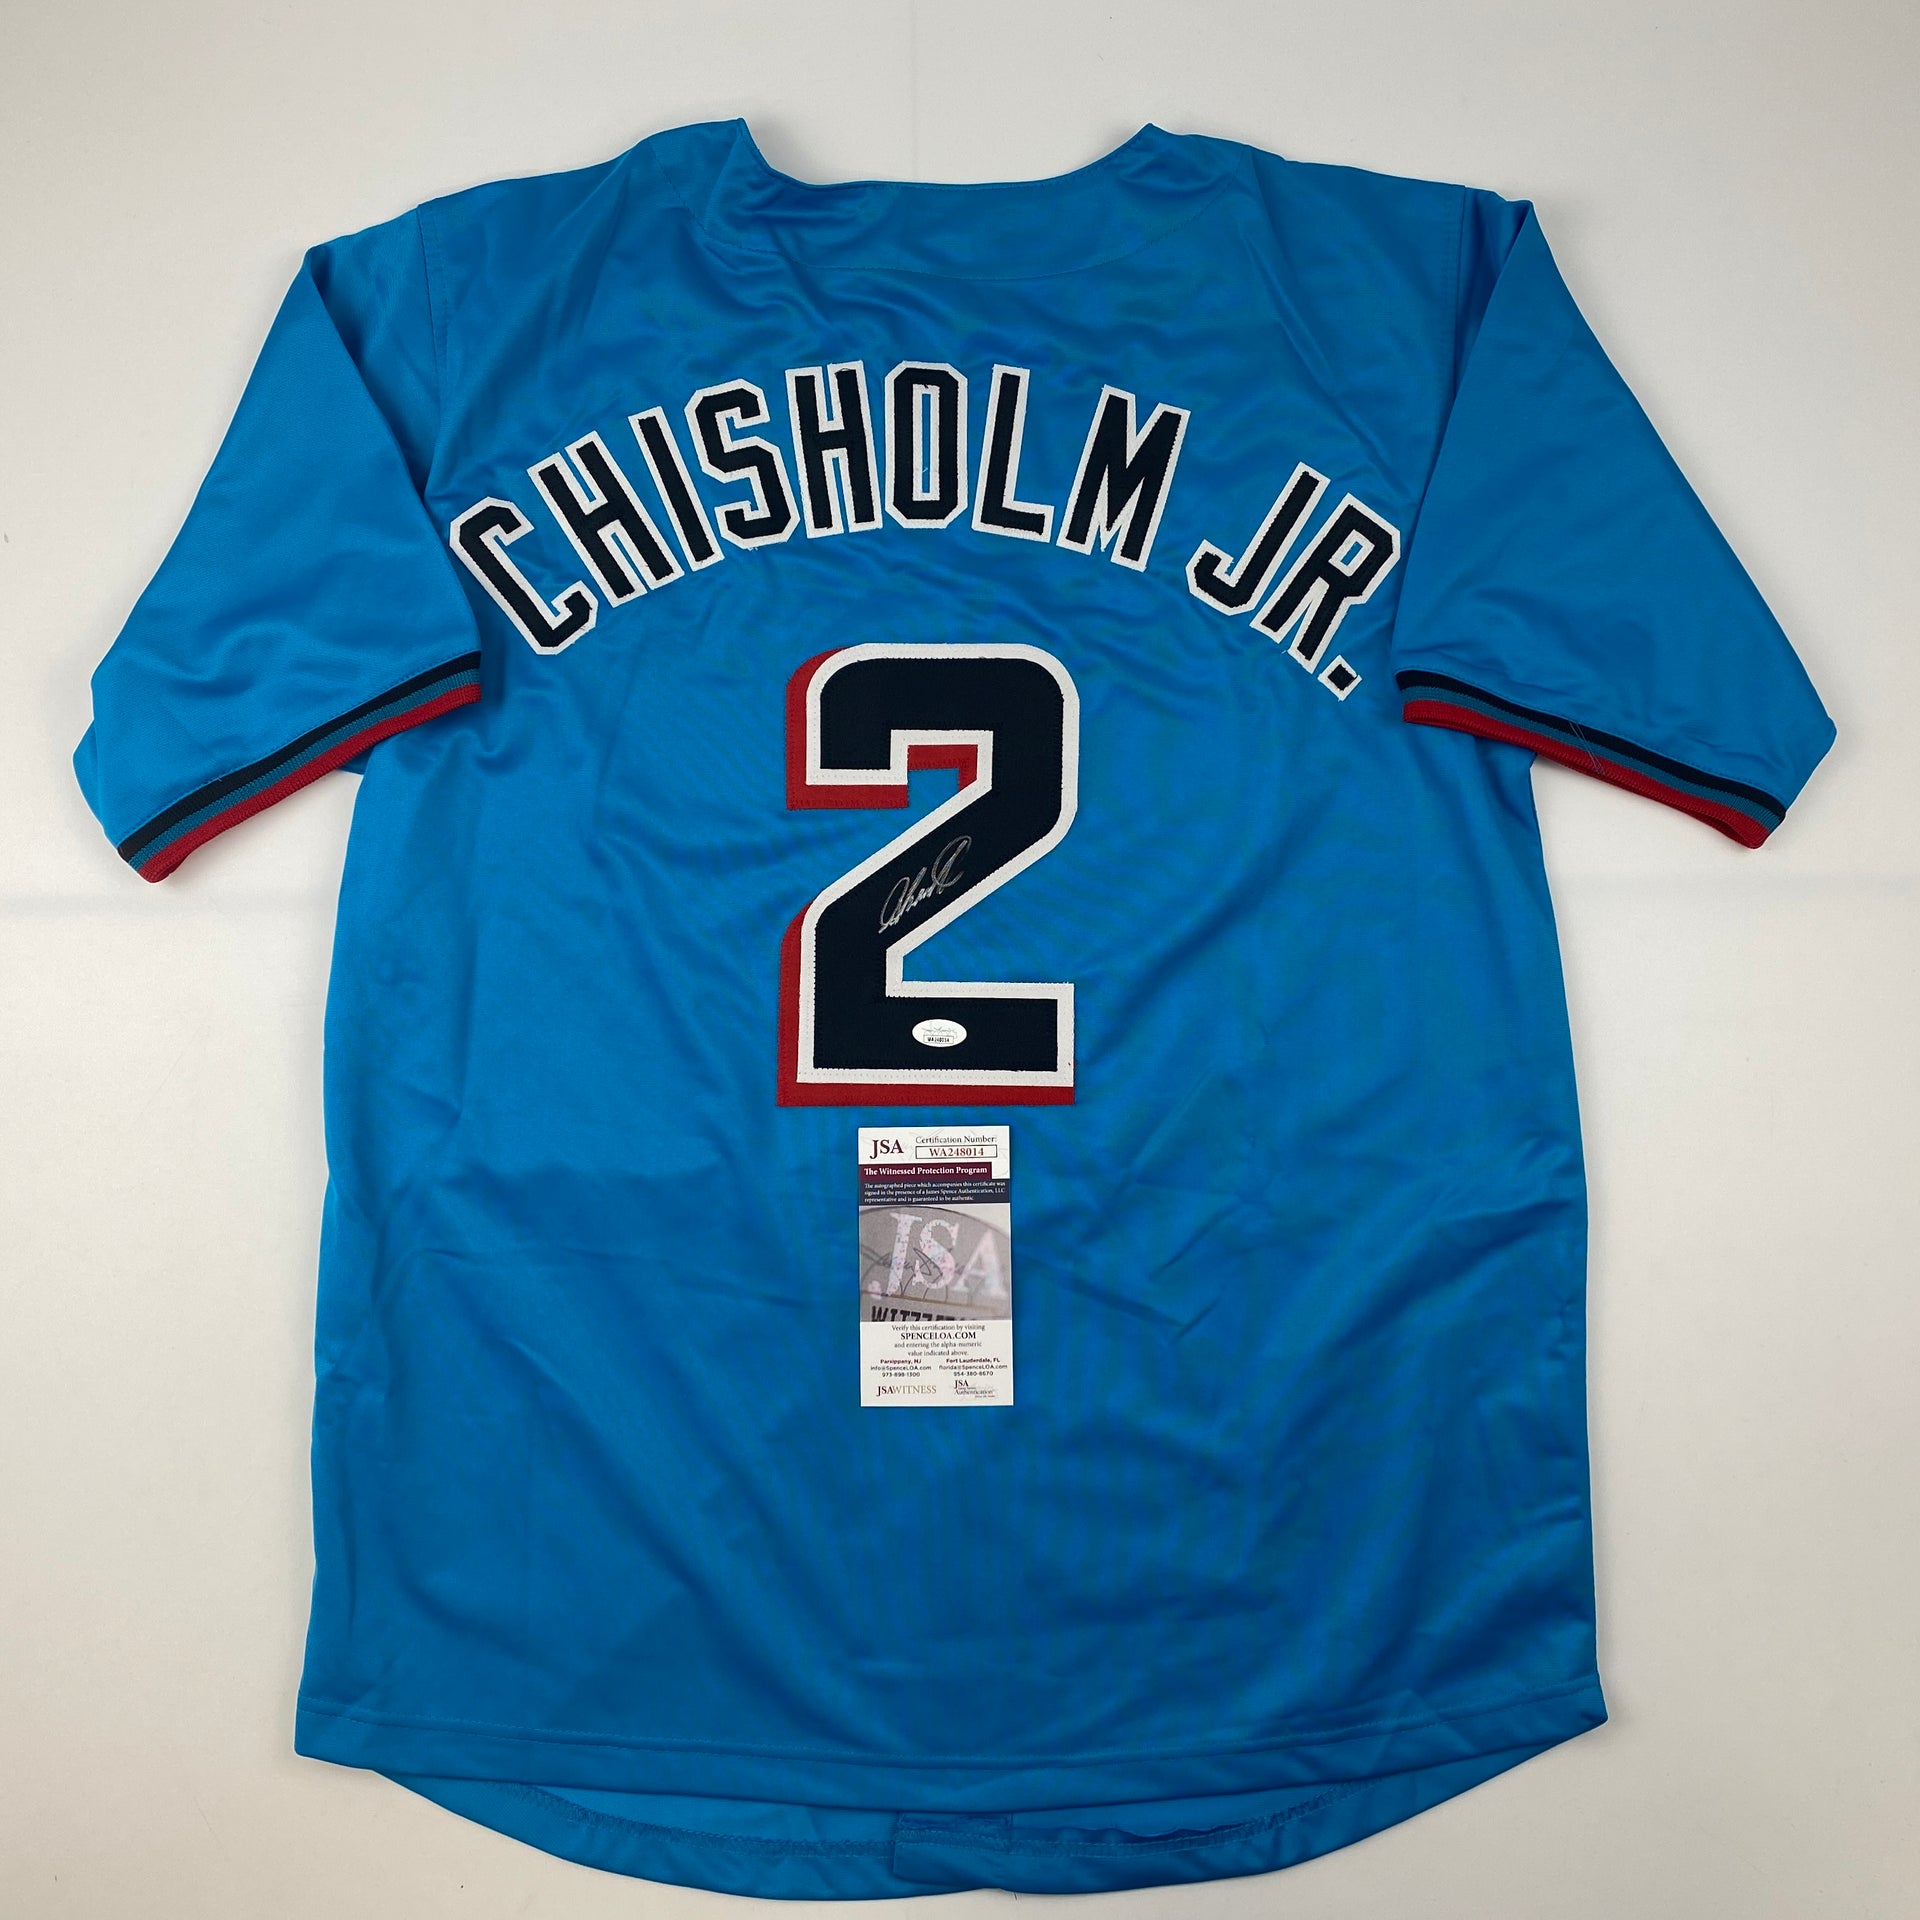 Autographed/Signed Jazz Chisholm Jr. Miami Blue Baseball Jersey JSA COA -  Hall of Fame Sports Memorabilia